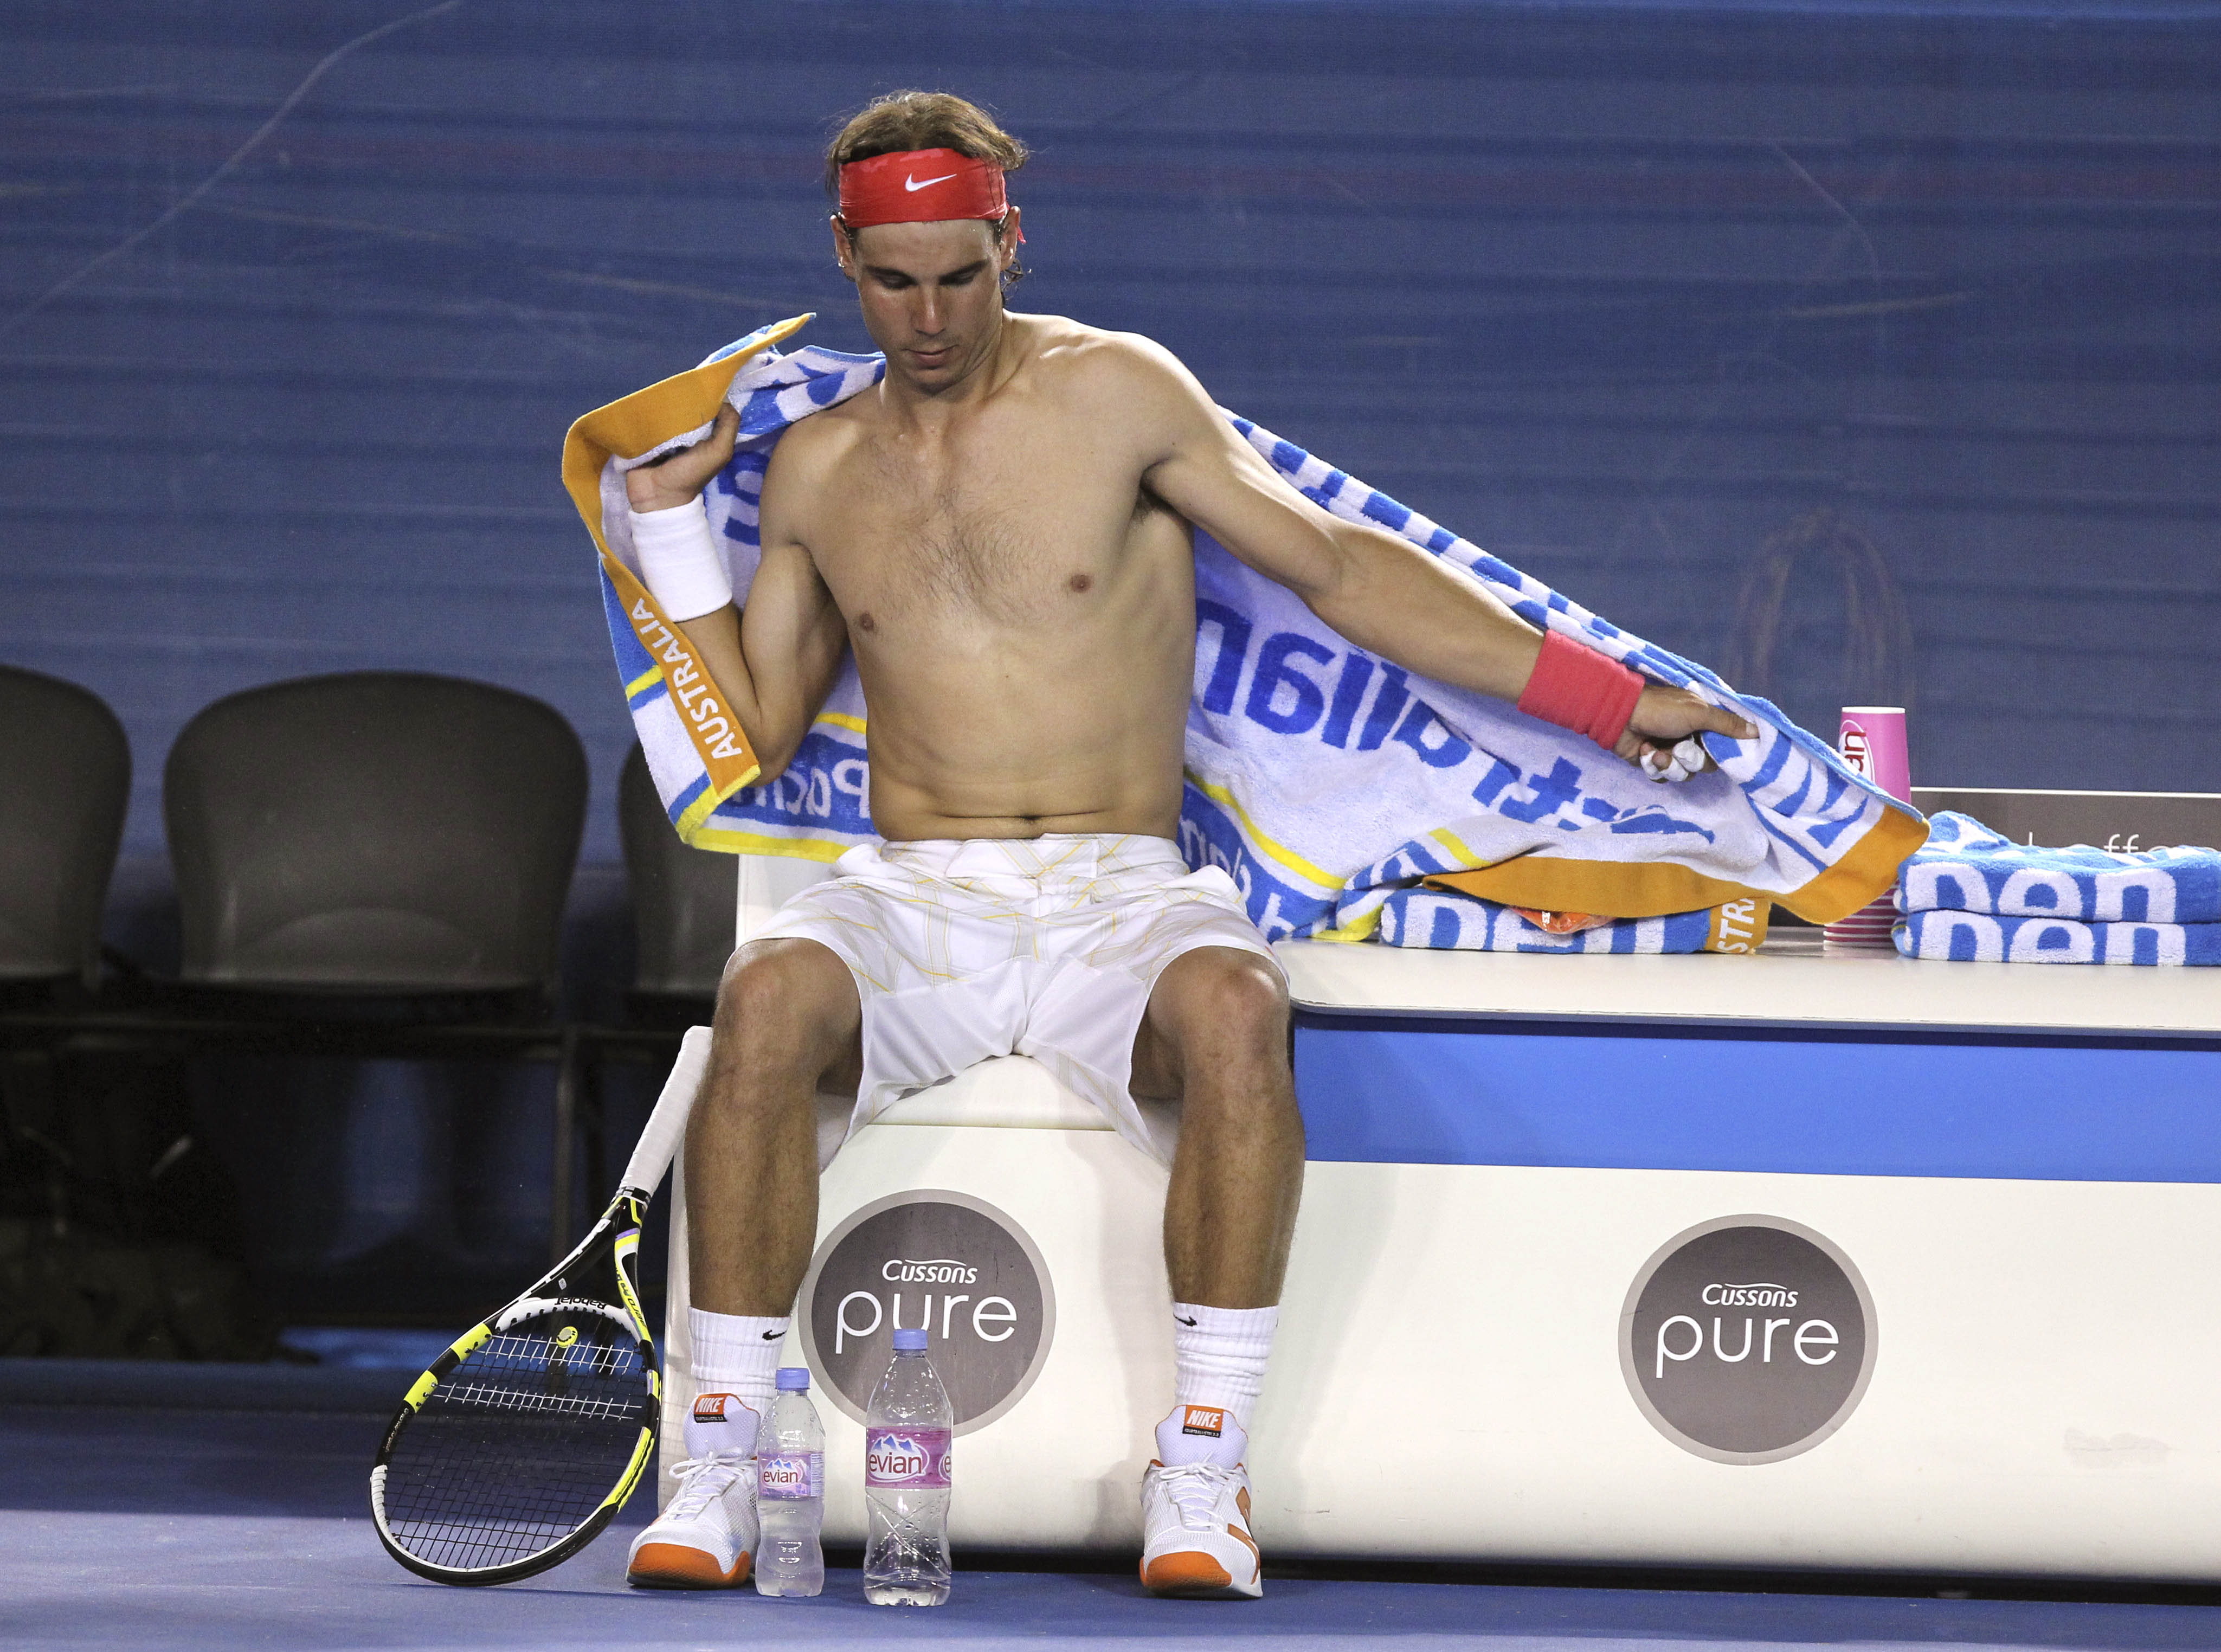 Australian Open, Kim Clijsters, Juan Martin del Potro, Rafael Nadal, Andy Roddick, Andy Murray, Tennis, Roger Federer